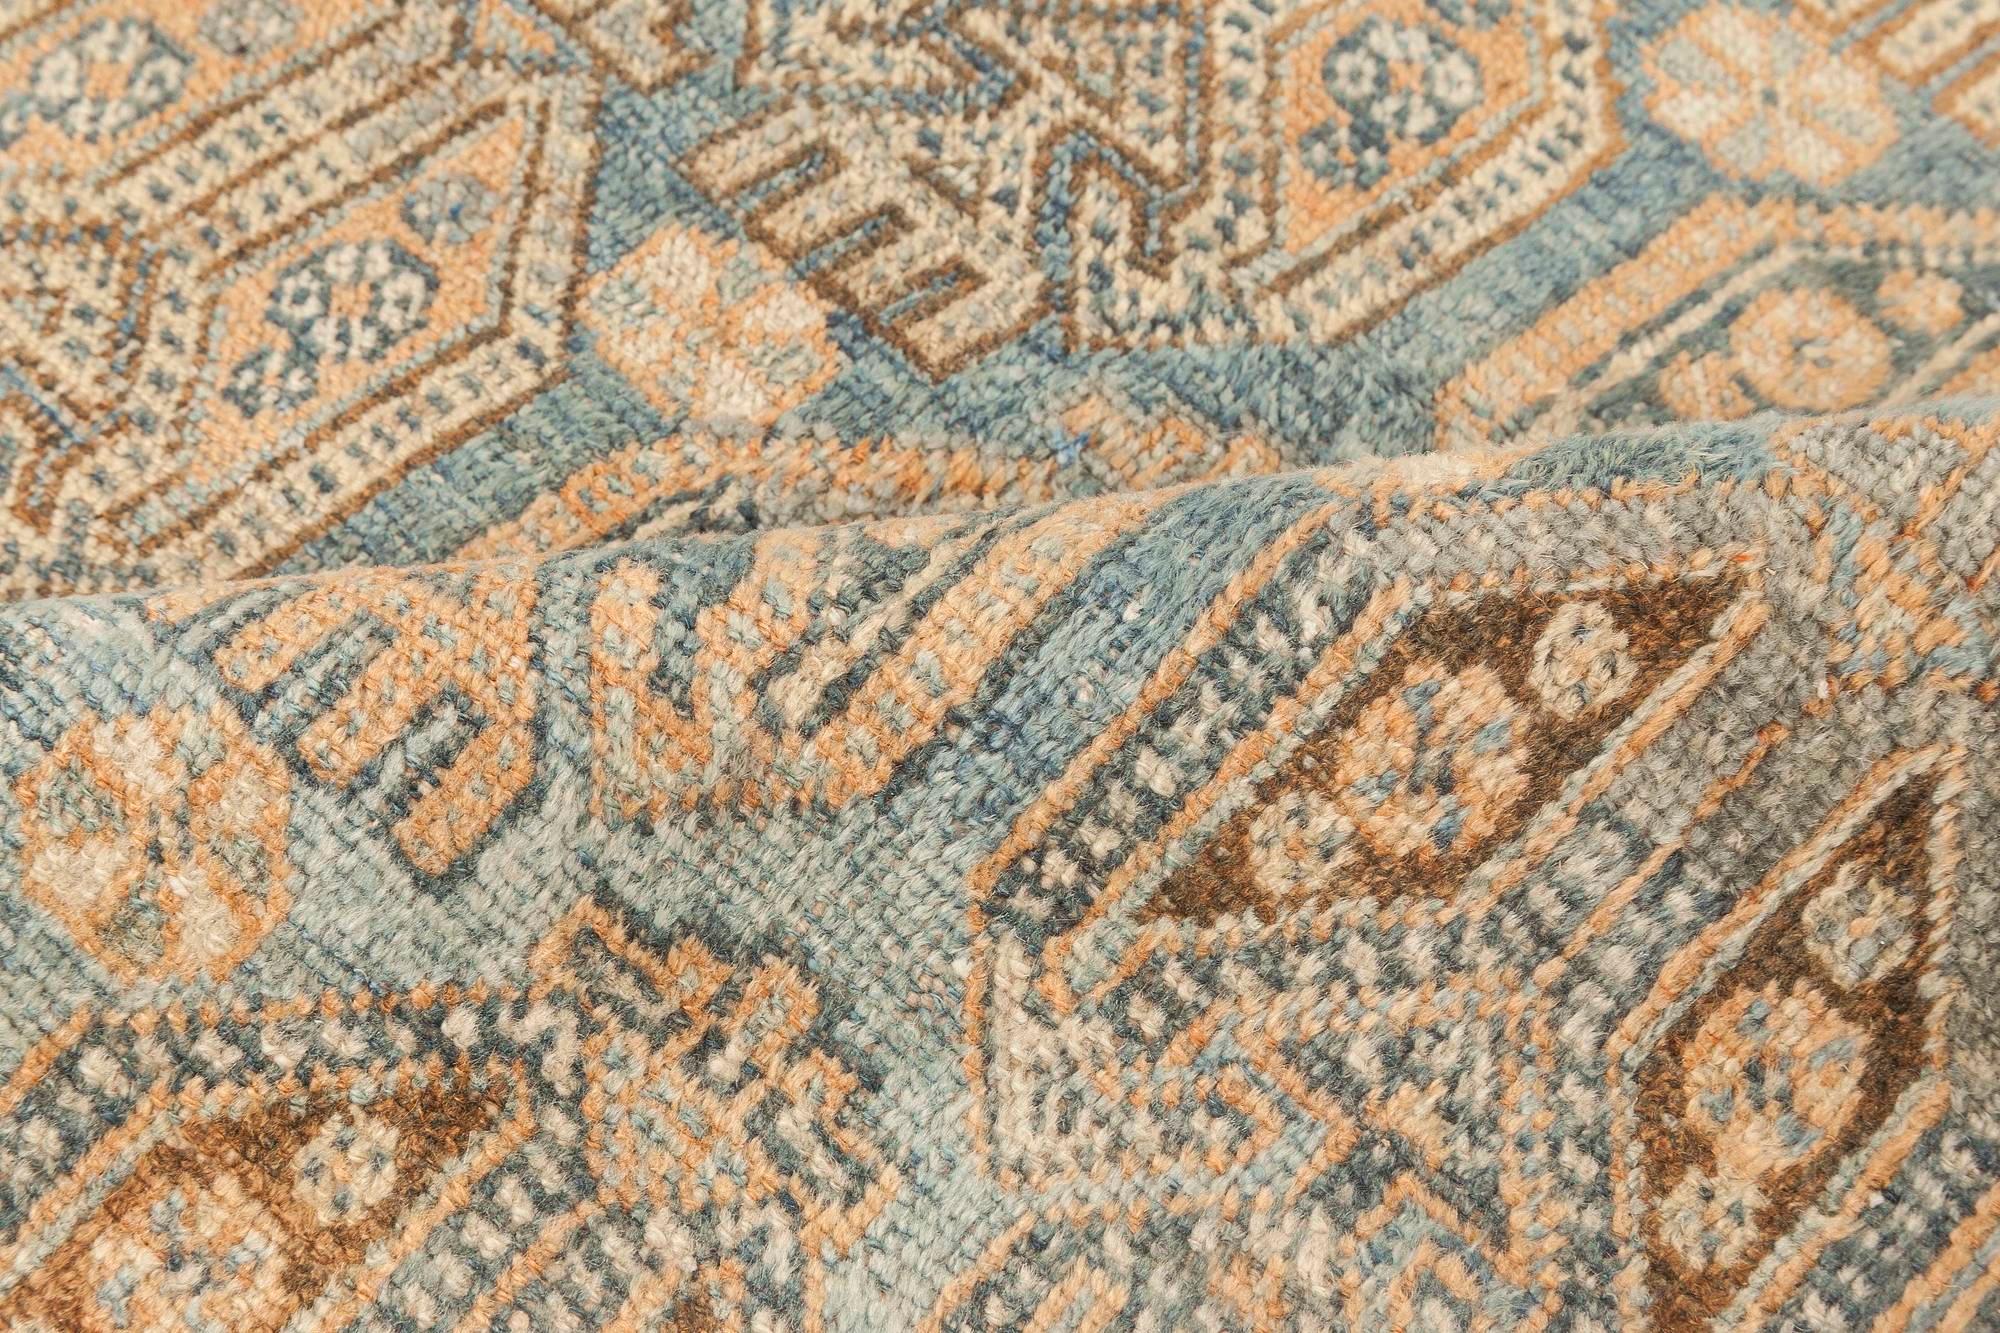 Early 20th century blue Persian Malayer handmade wool rug by Doris Leslie Blau
Size: 7'1